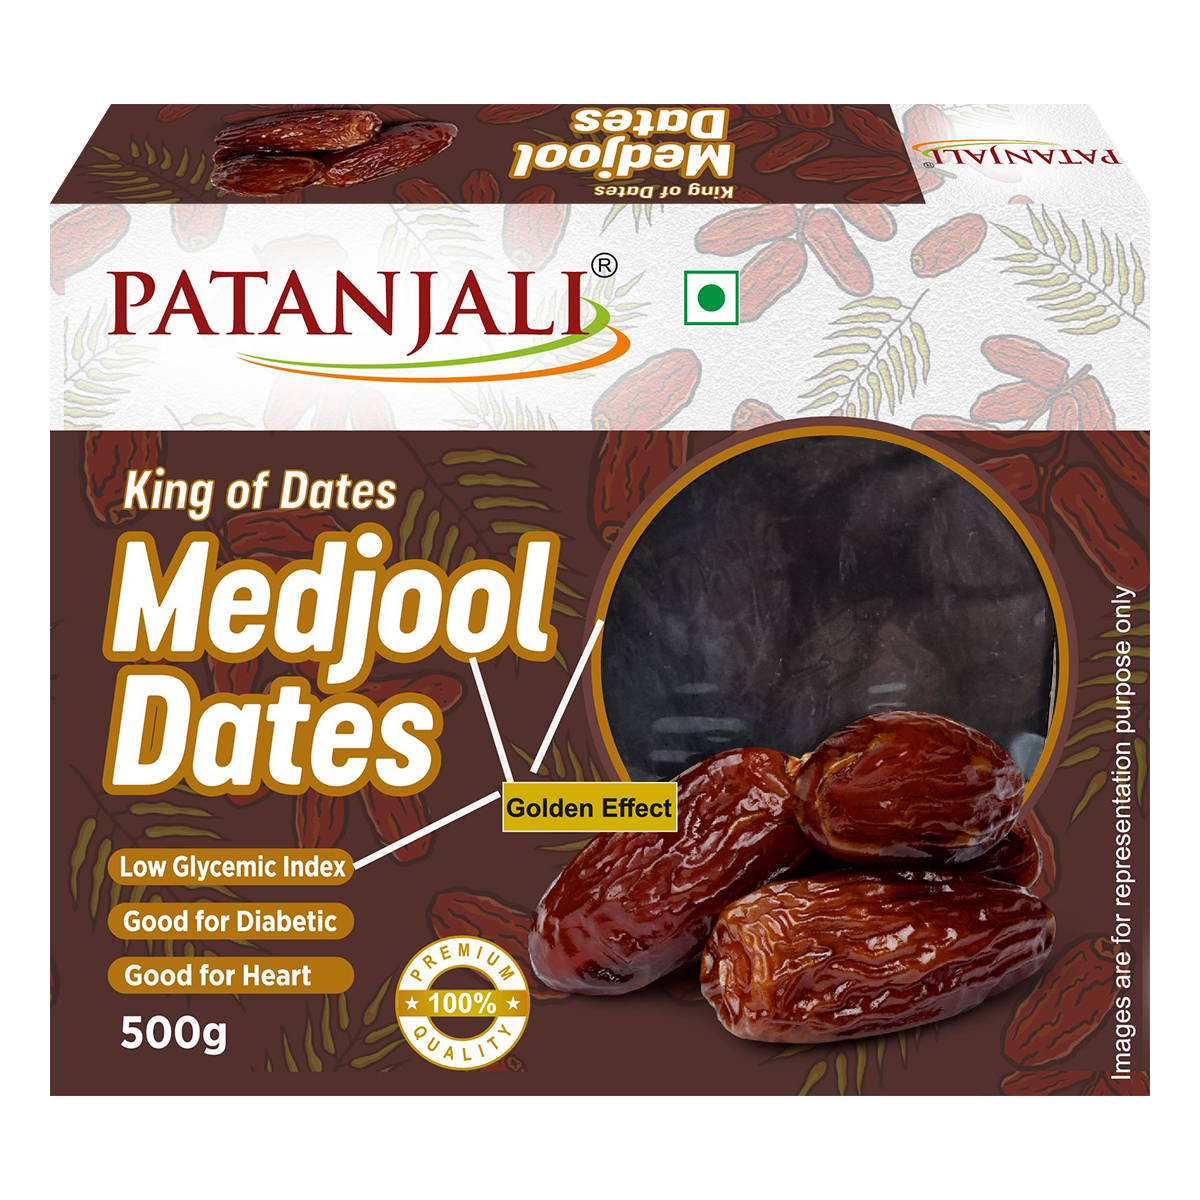 Patanjali Dates (Medjool)